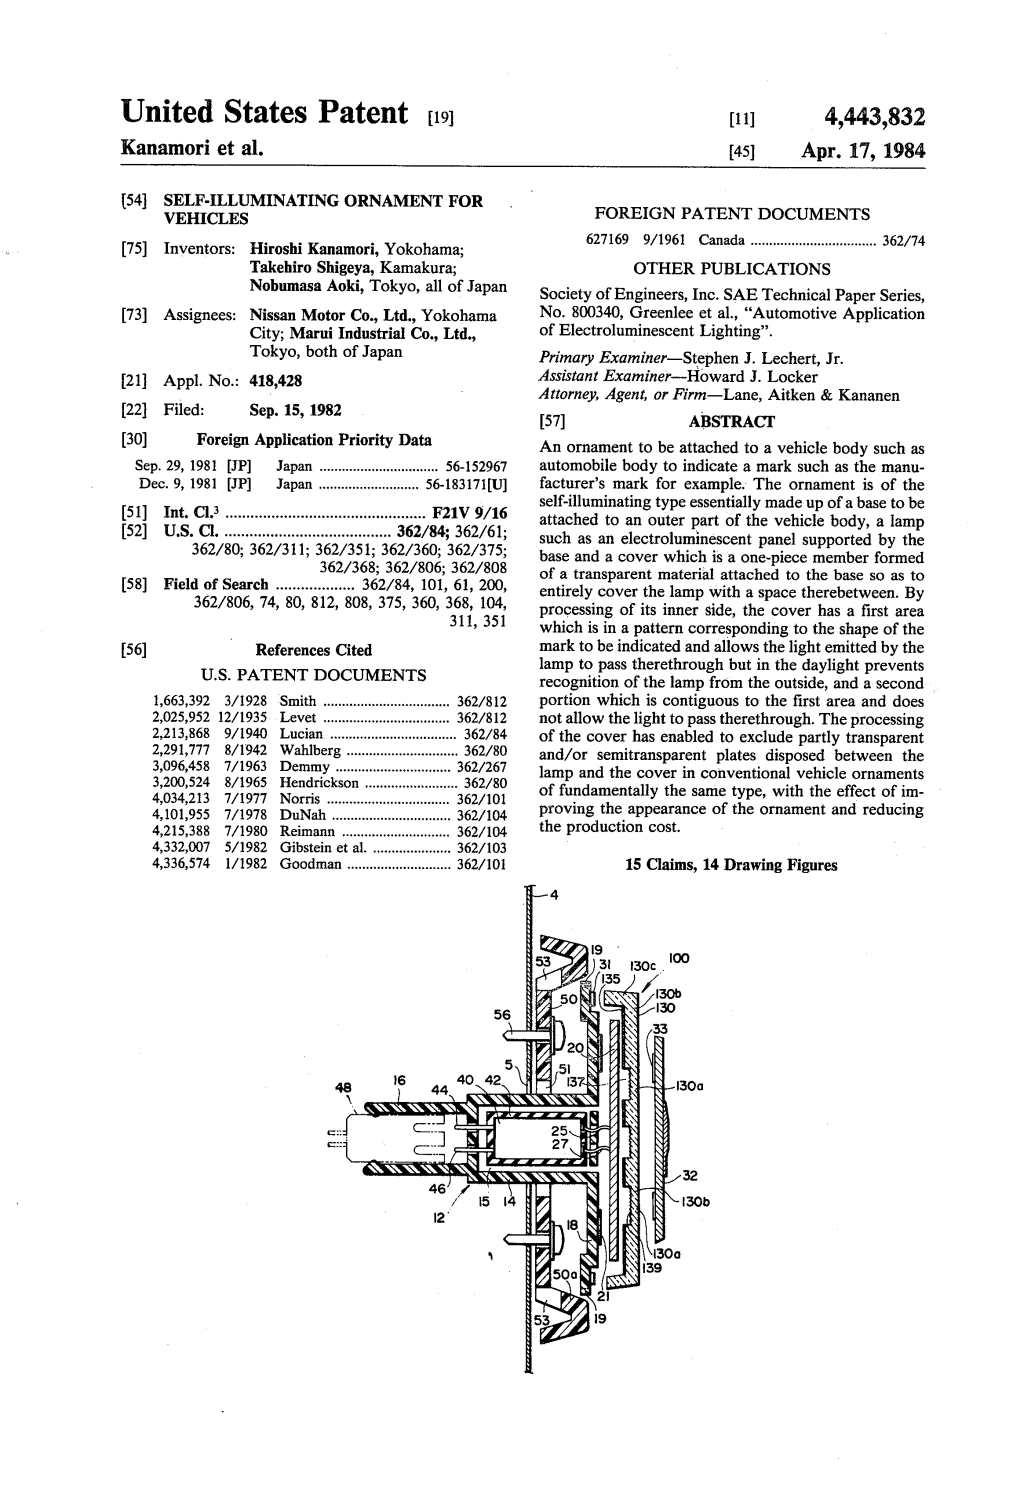 United States Patent 19 11 4,443,832 Kanamori Et Al